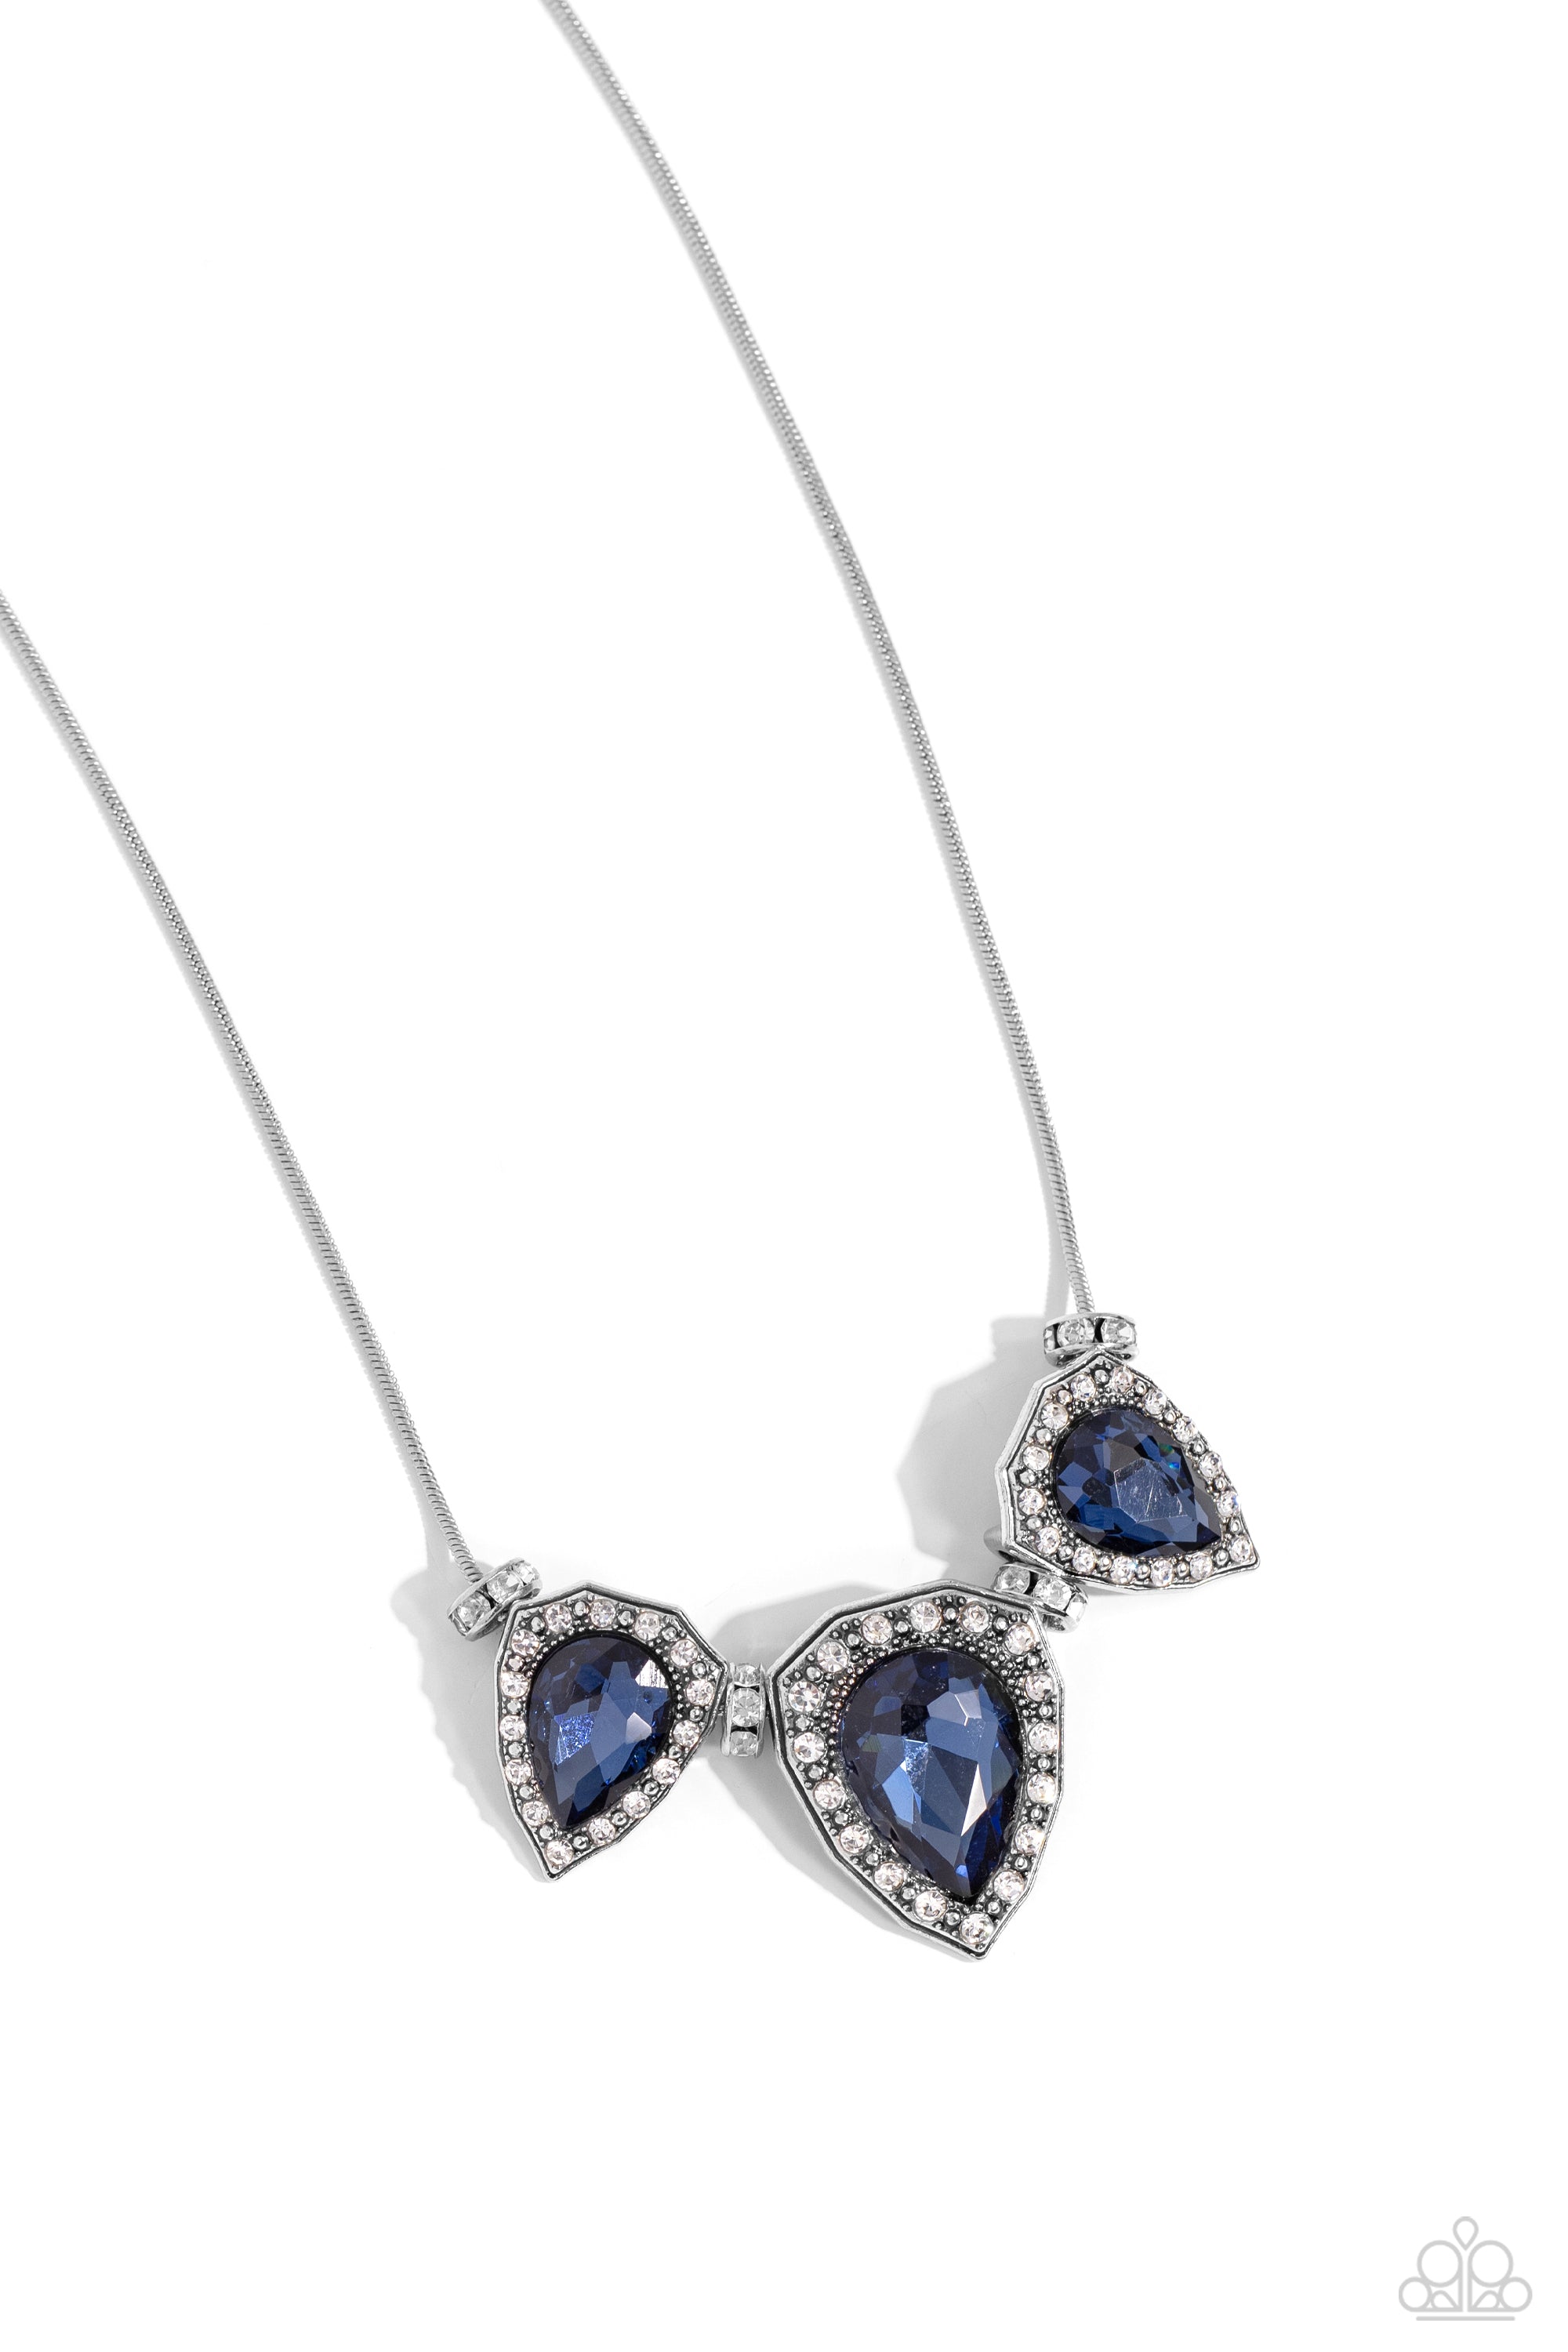 Majestic Met Ball Blue Rhinestone Necklace - Paparazzi Accessories- lightbox - CarasShop.com - $5 Jewelry by Cara Jewels